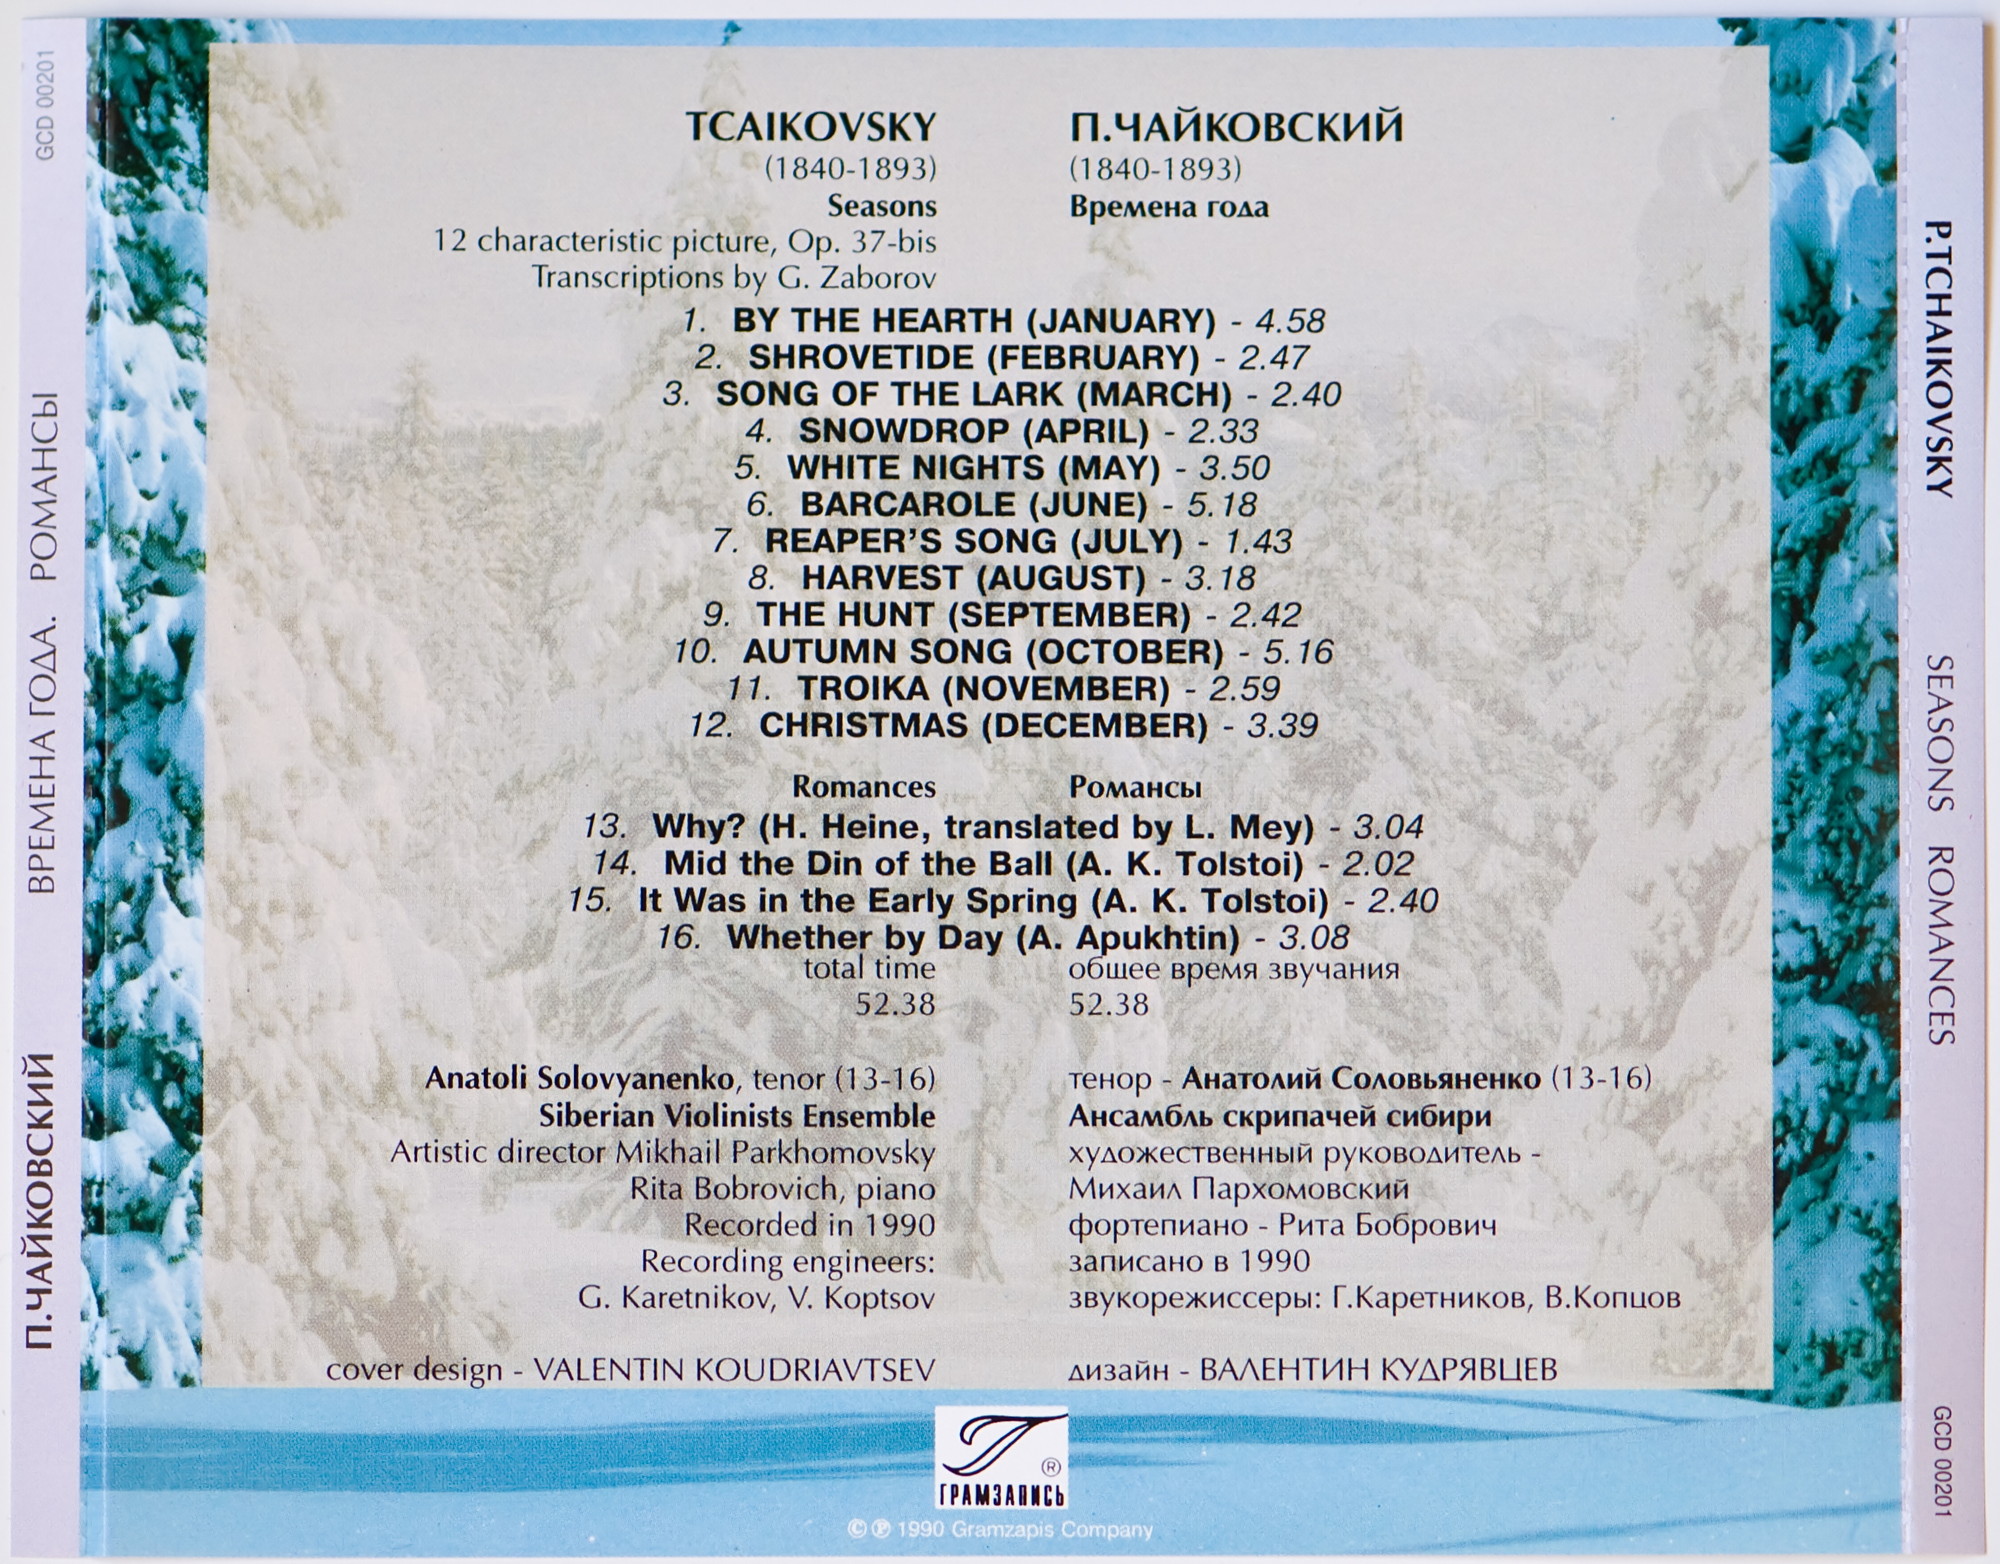 Tchaikovsky - Seasons, Romances - A.Solovyanenko, Siberian Violinests Ensemble - M.Parkhomovsky